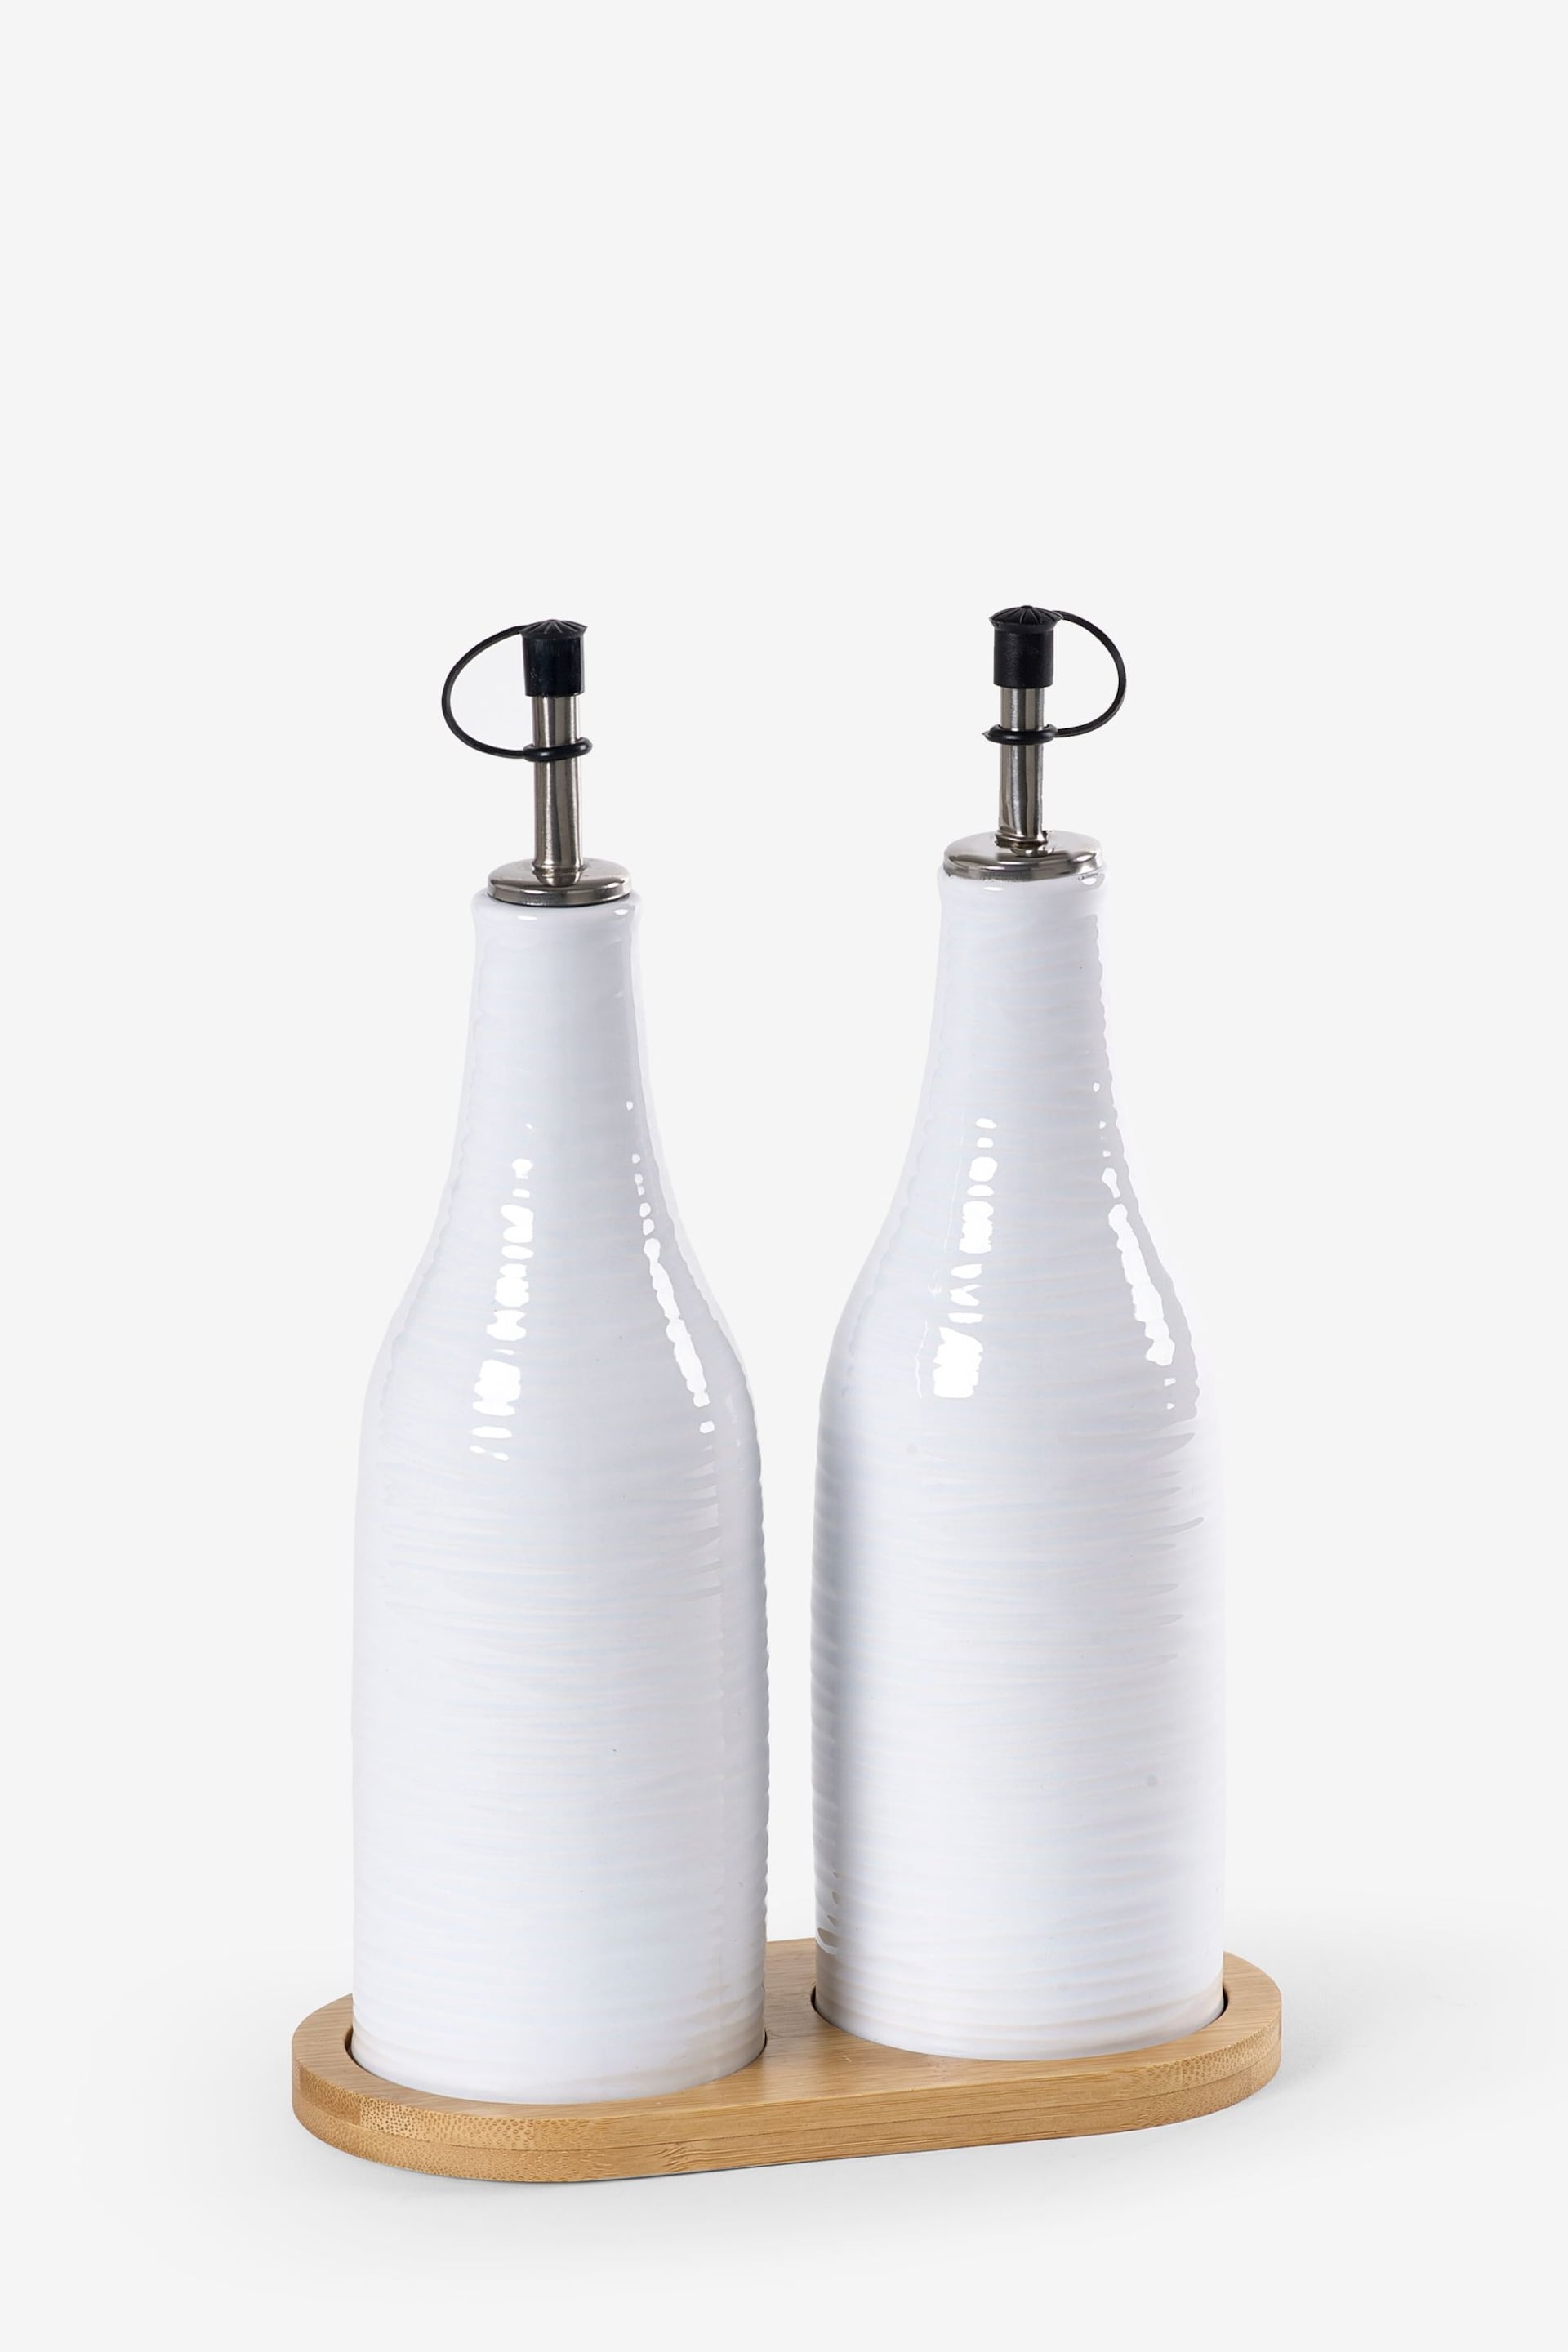 Set of 2 White Malvern Embossed Oil Set of 2 Oil Bottles Bottles with Tray - Image 4 of 4